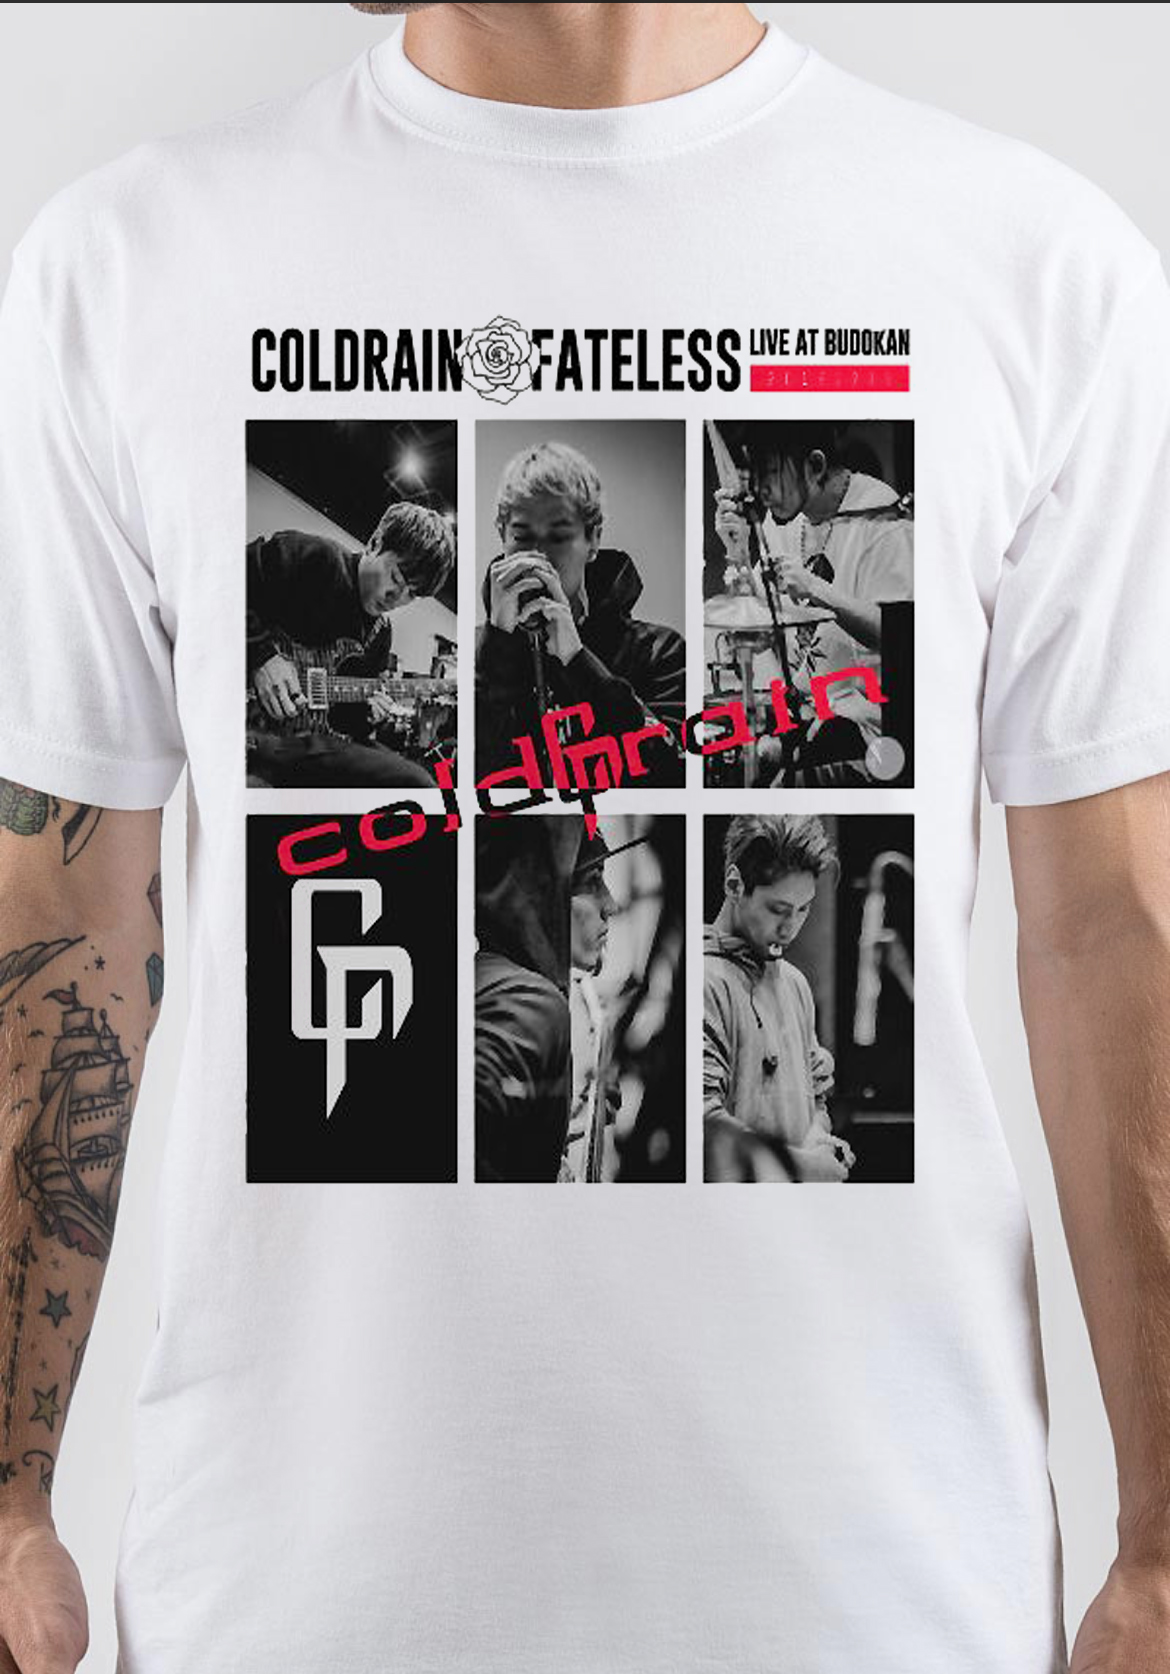 Coldrain T-Shirt And Merchandise